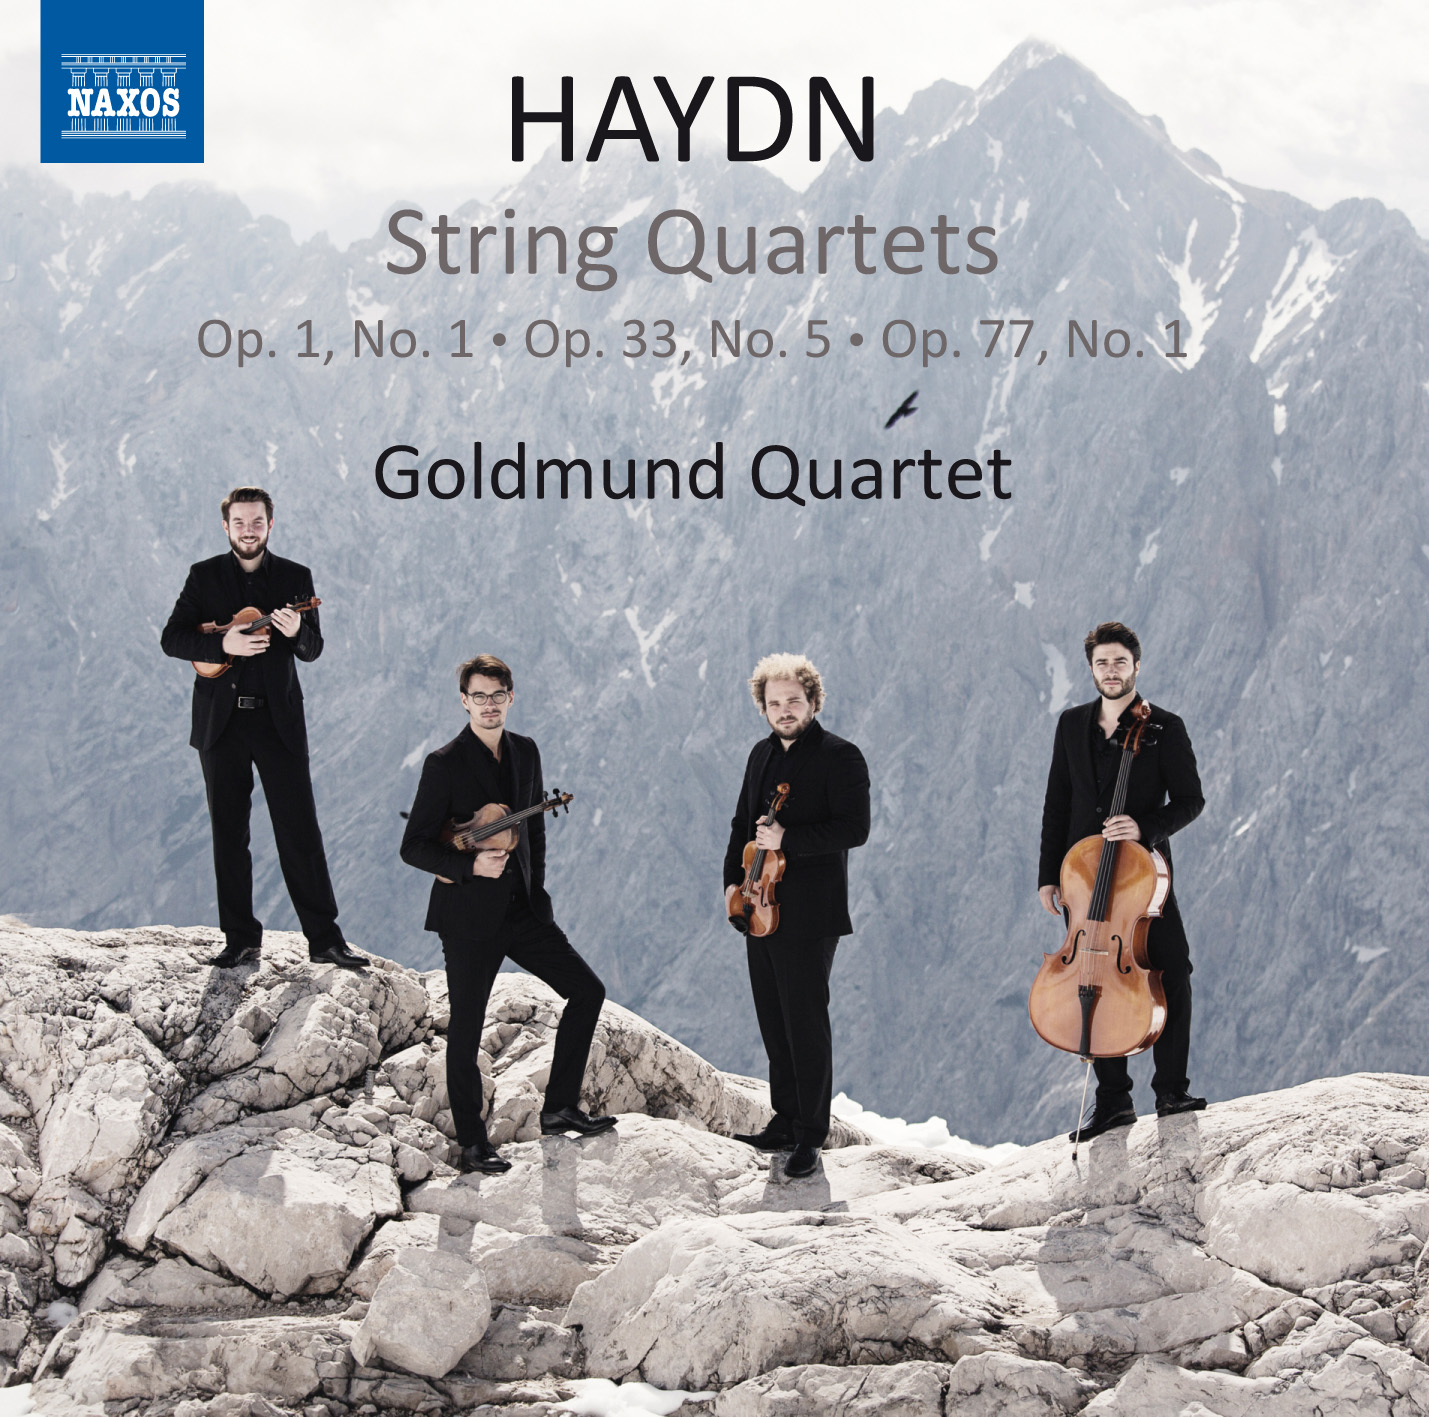 sibelius string quartet in e flat major